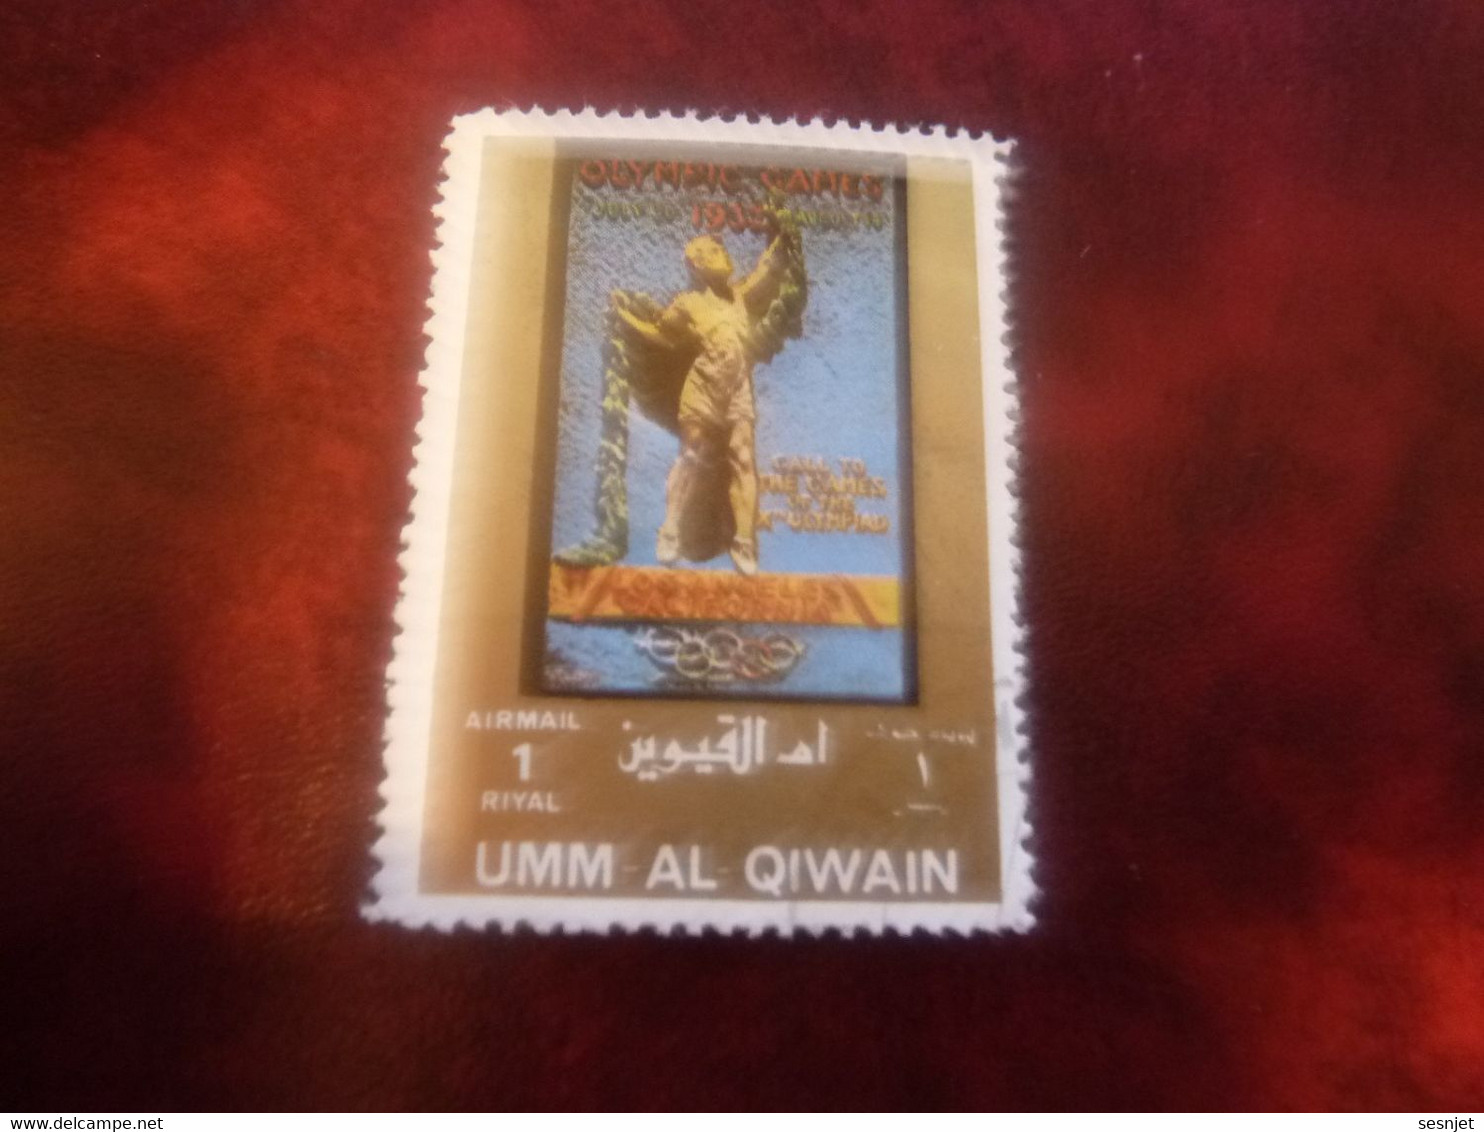 Umm Al Qiwain - Olympic Games 1932 - Val 1 Riyal - Air Mail - Polychrome - Oblitéré - Année 1972 - - Summer 1932: Los Angeles